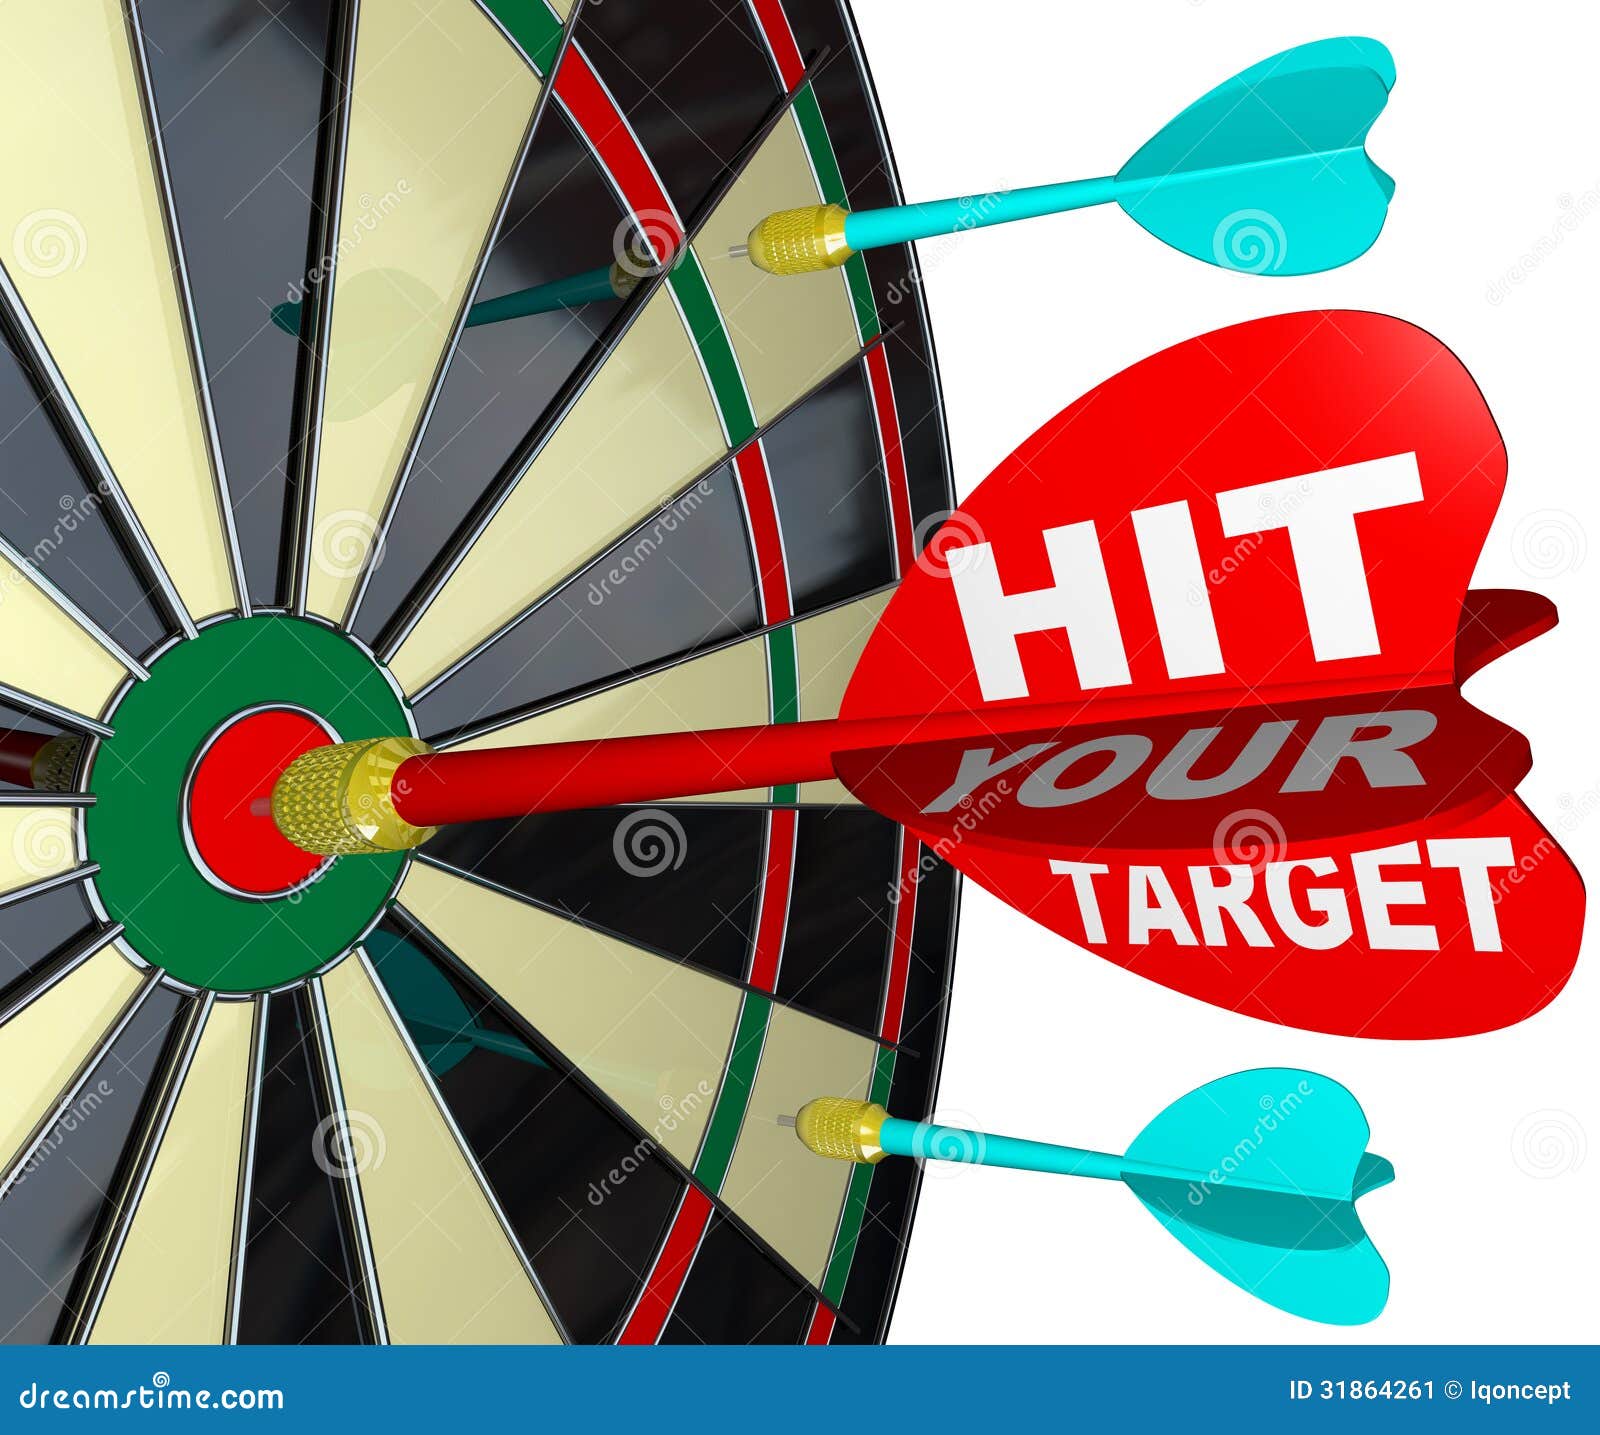 hit your target dart on dartboard achieve success